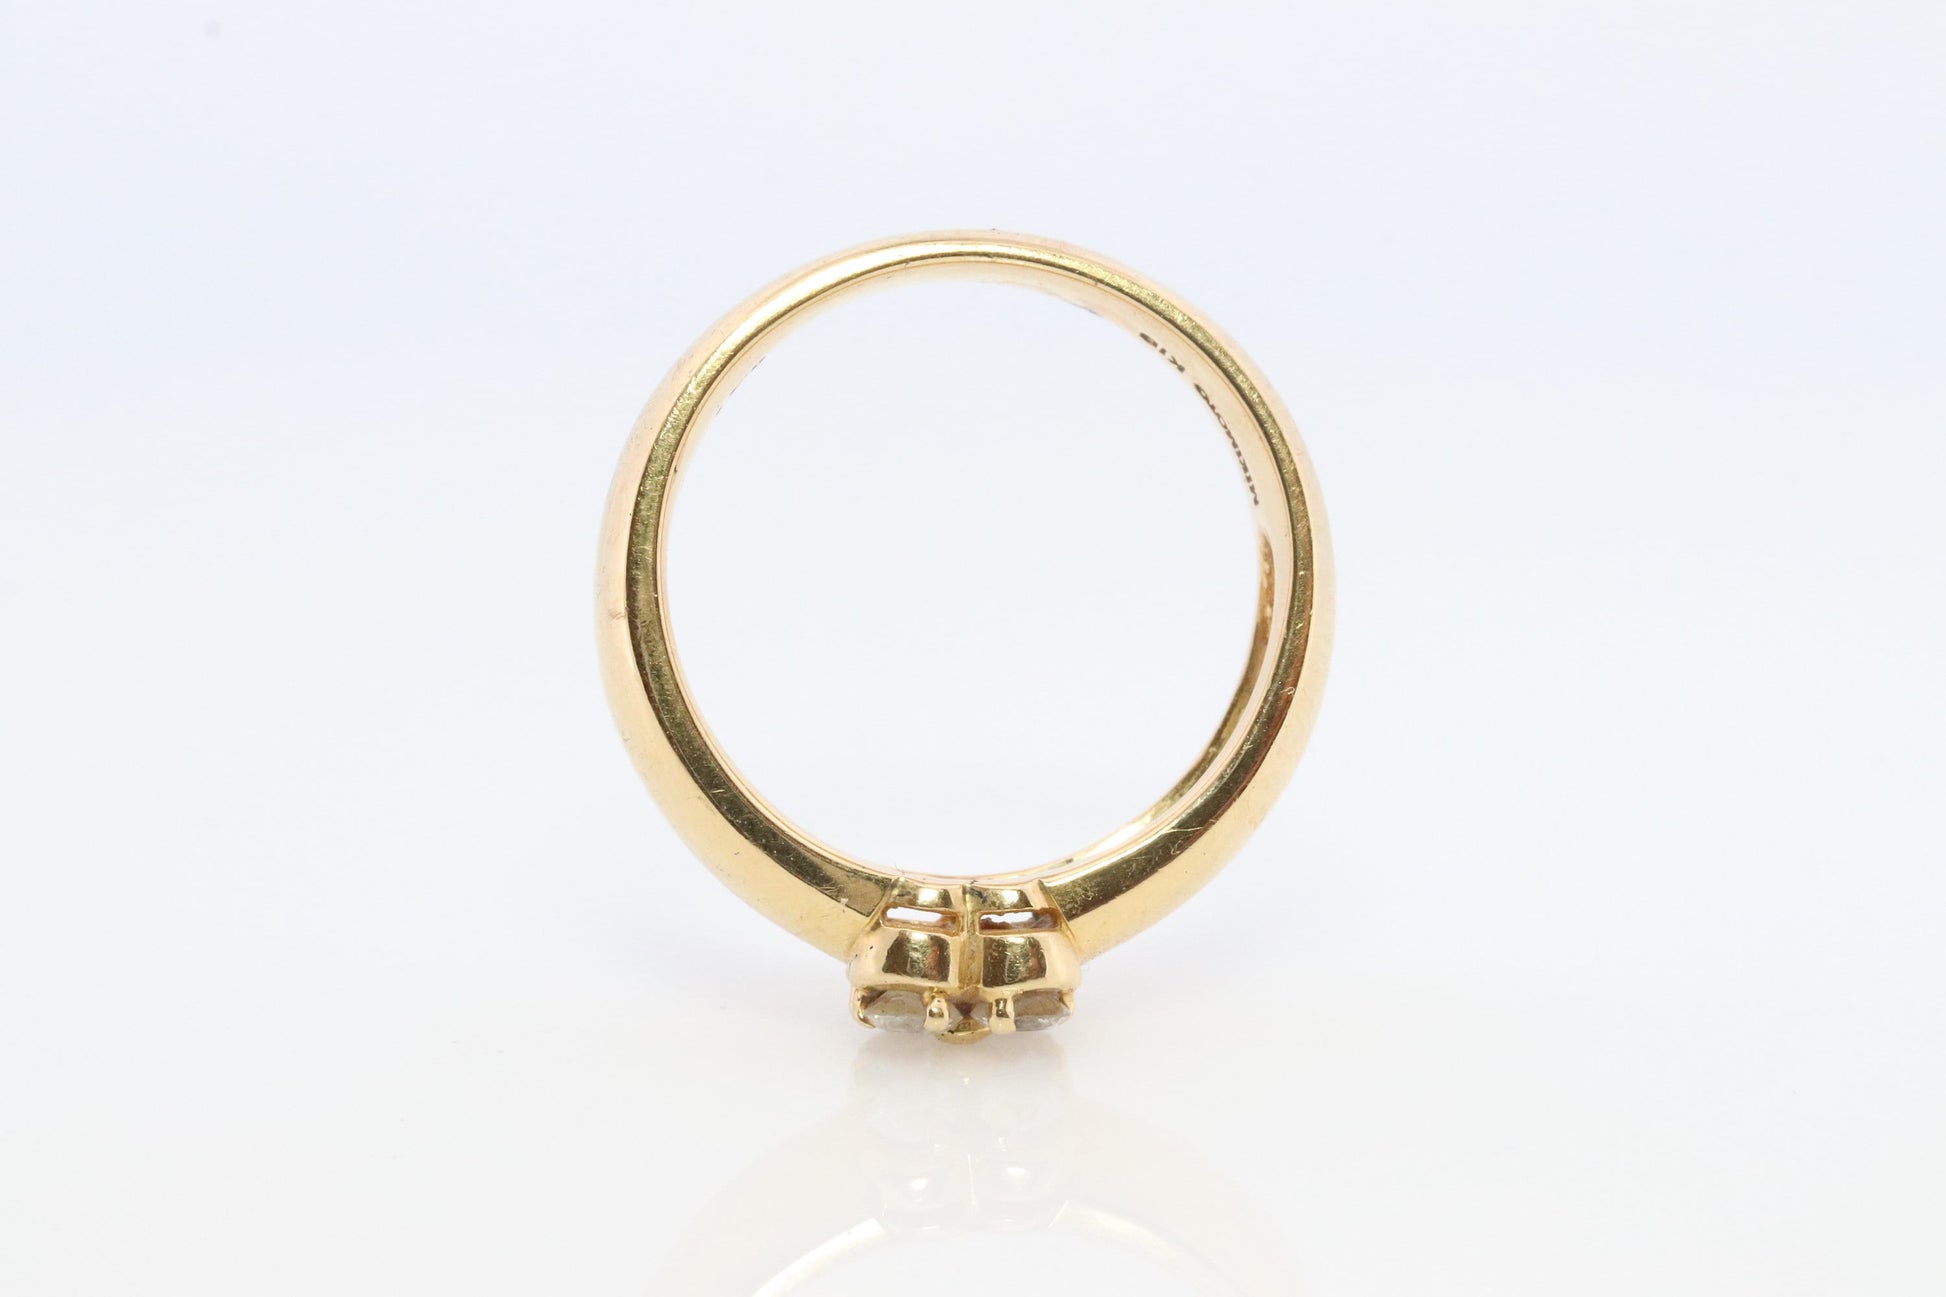 Mikimoto Ring. Vintage 18k Gold Mikimoto Diamond Clover ring. Mikimoto Diamond Cluster band. Mikimoto Flower. Wide wedding band.